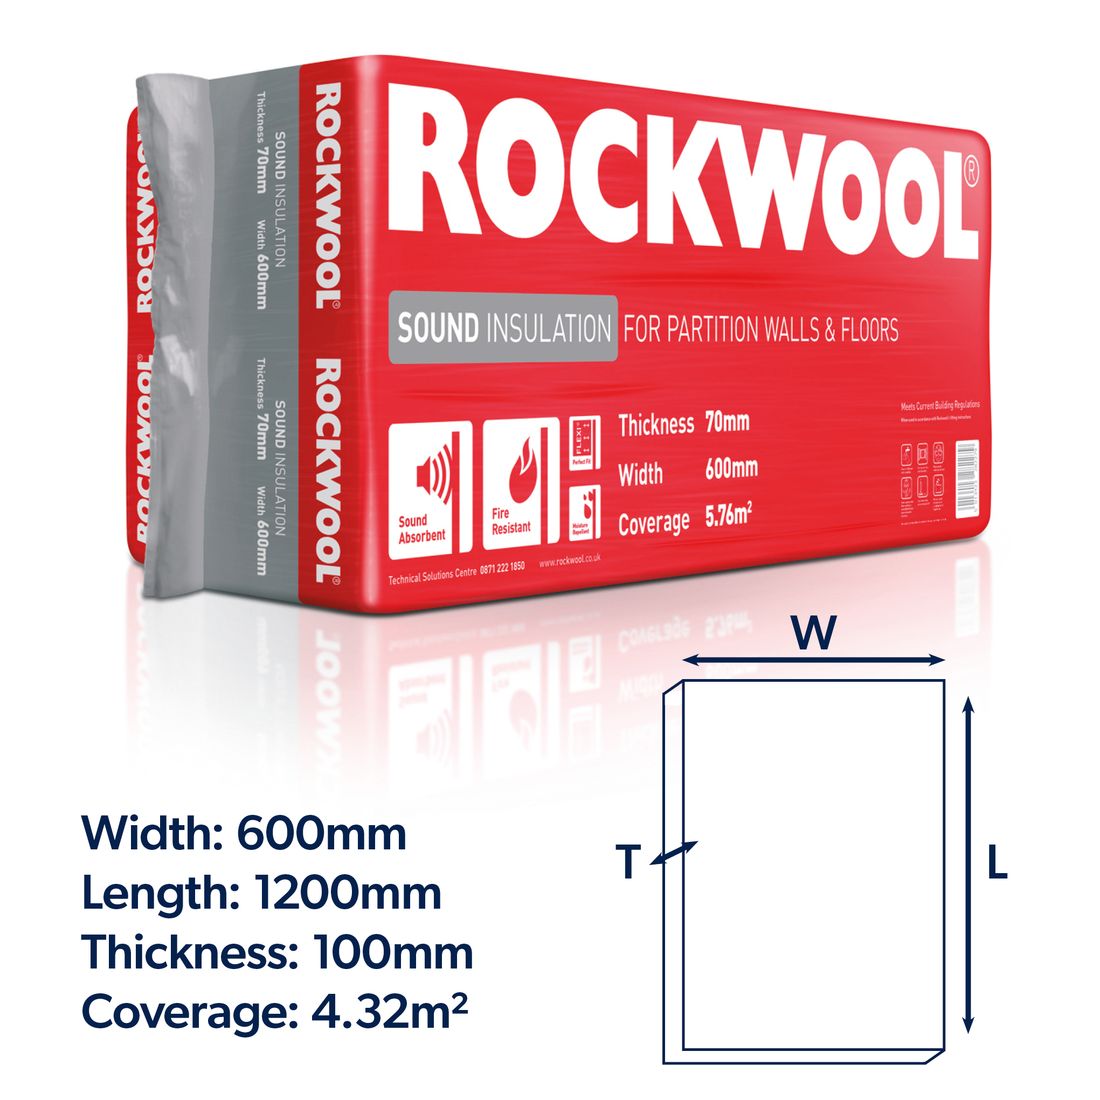 Rockwool Sound Insulation Slab 1200 X 600 X 100Mm Pk6 4.32M2